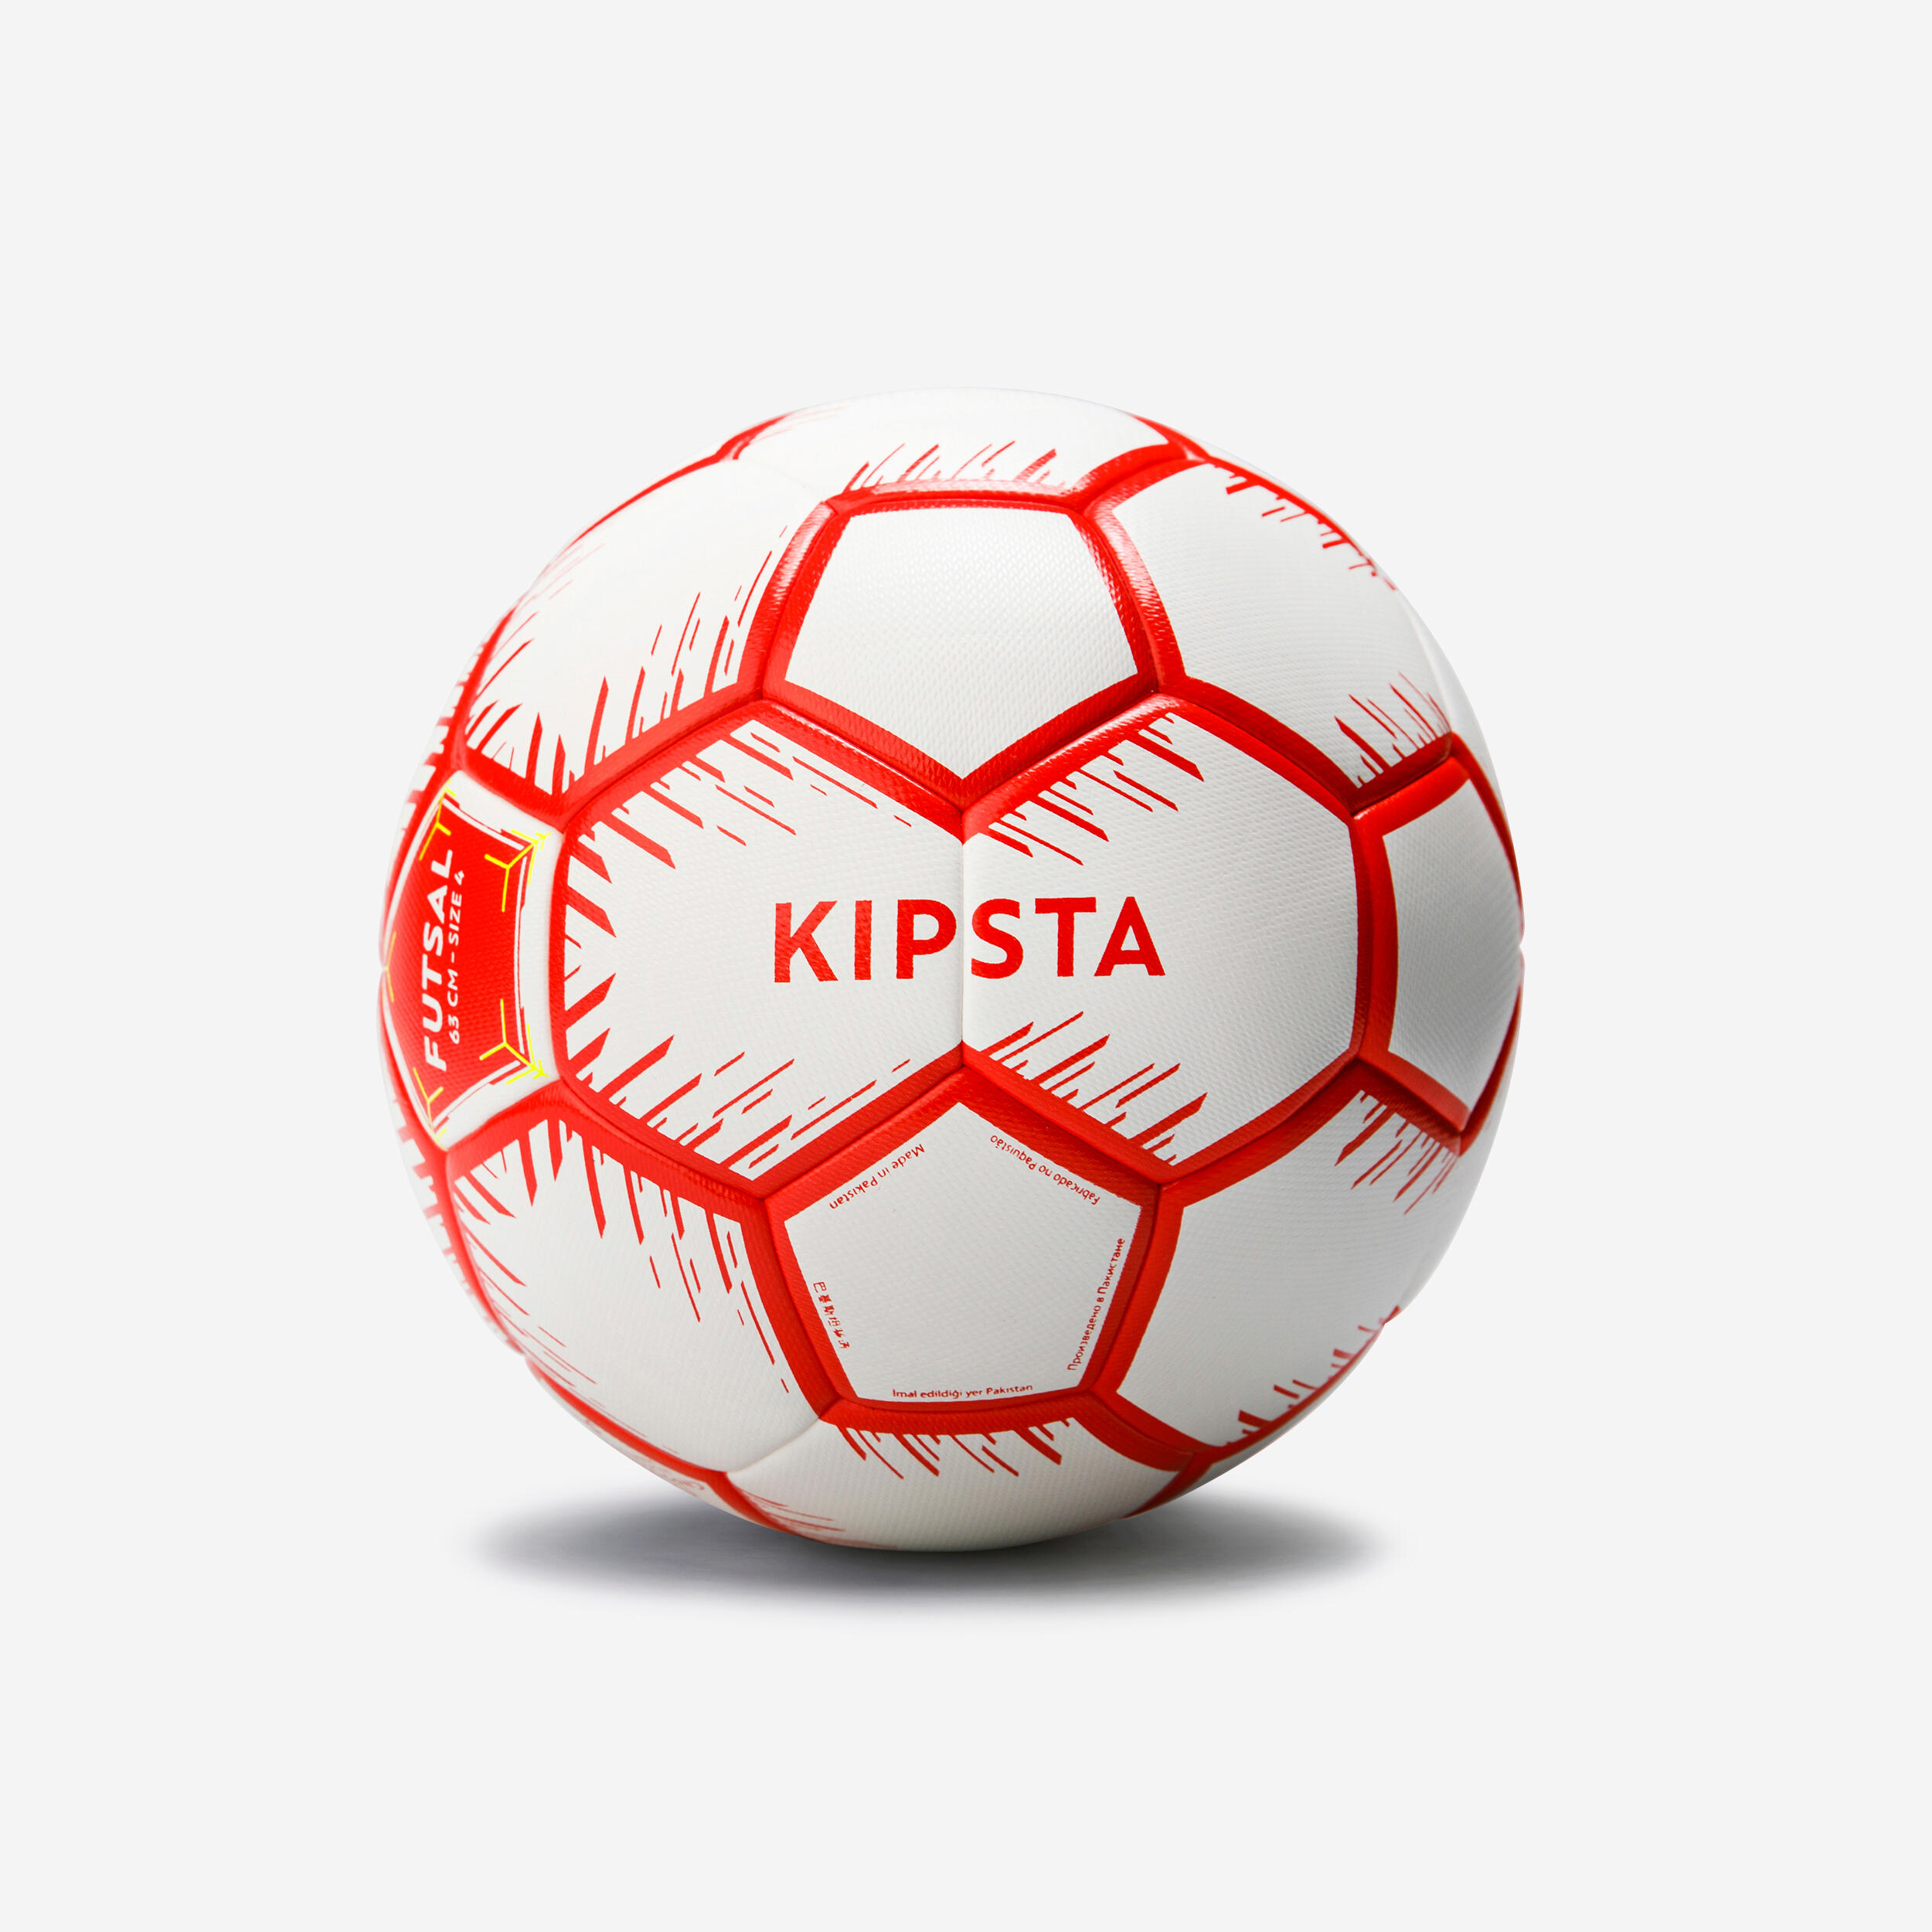 KIPSTA Ballon De Futsal Taille 4 (P&#xE9;rim&#xE8;tre 63cm) Rouge Et Blanc -